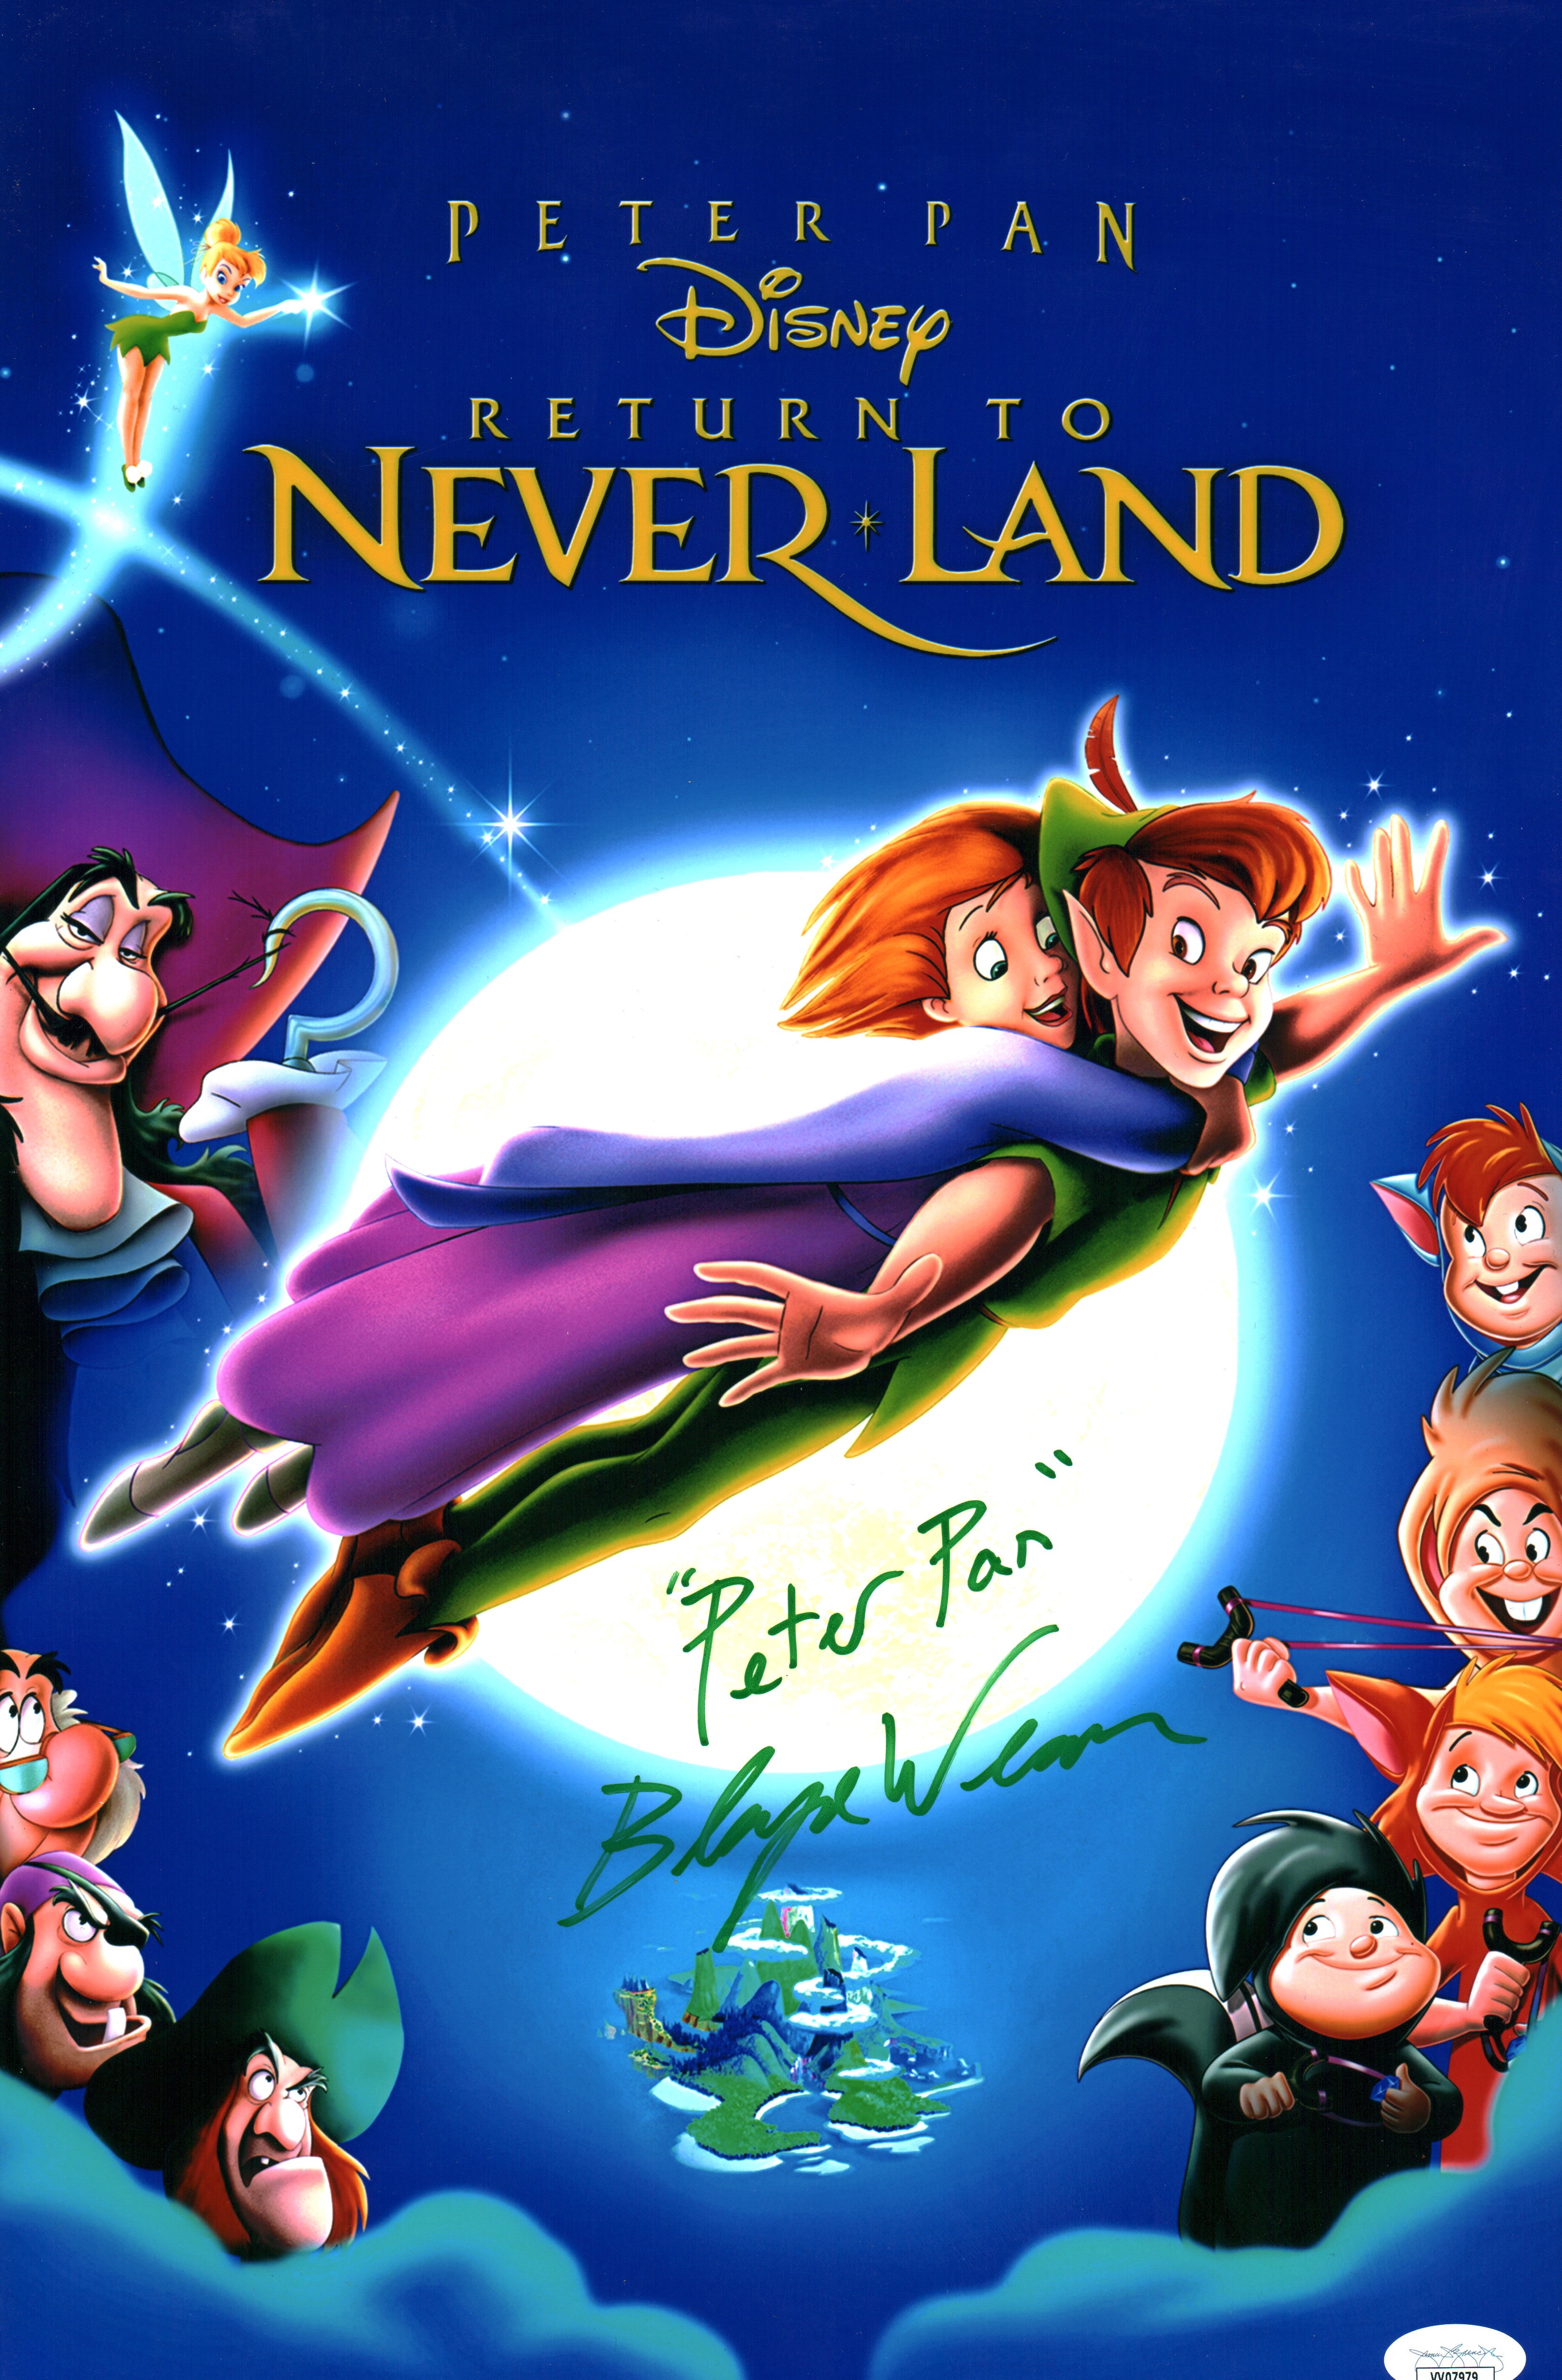 Blayne Weaver Disney's Peter Pan 11x17 Signed Photo Poster JSA Certified Autograph